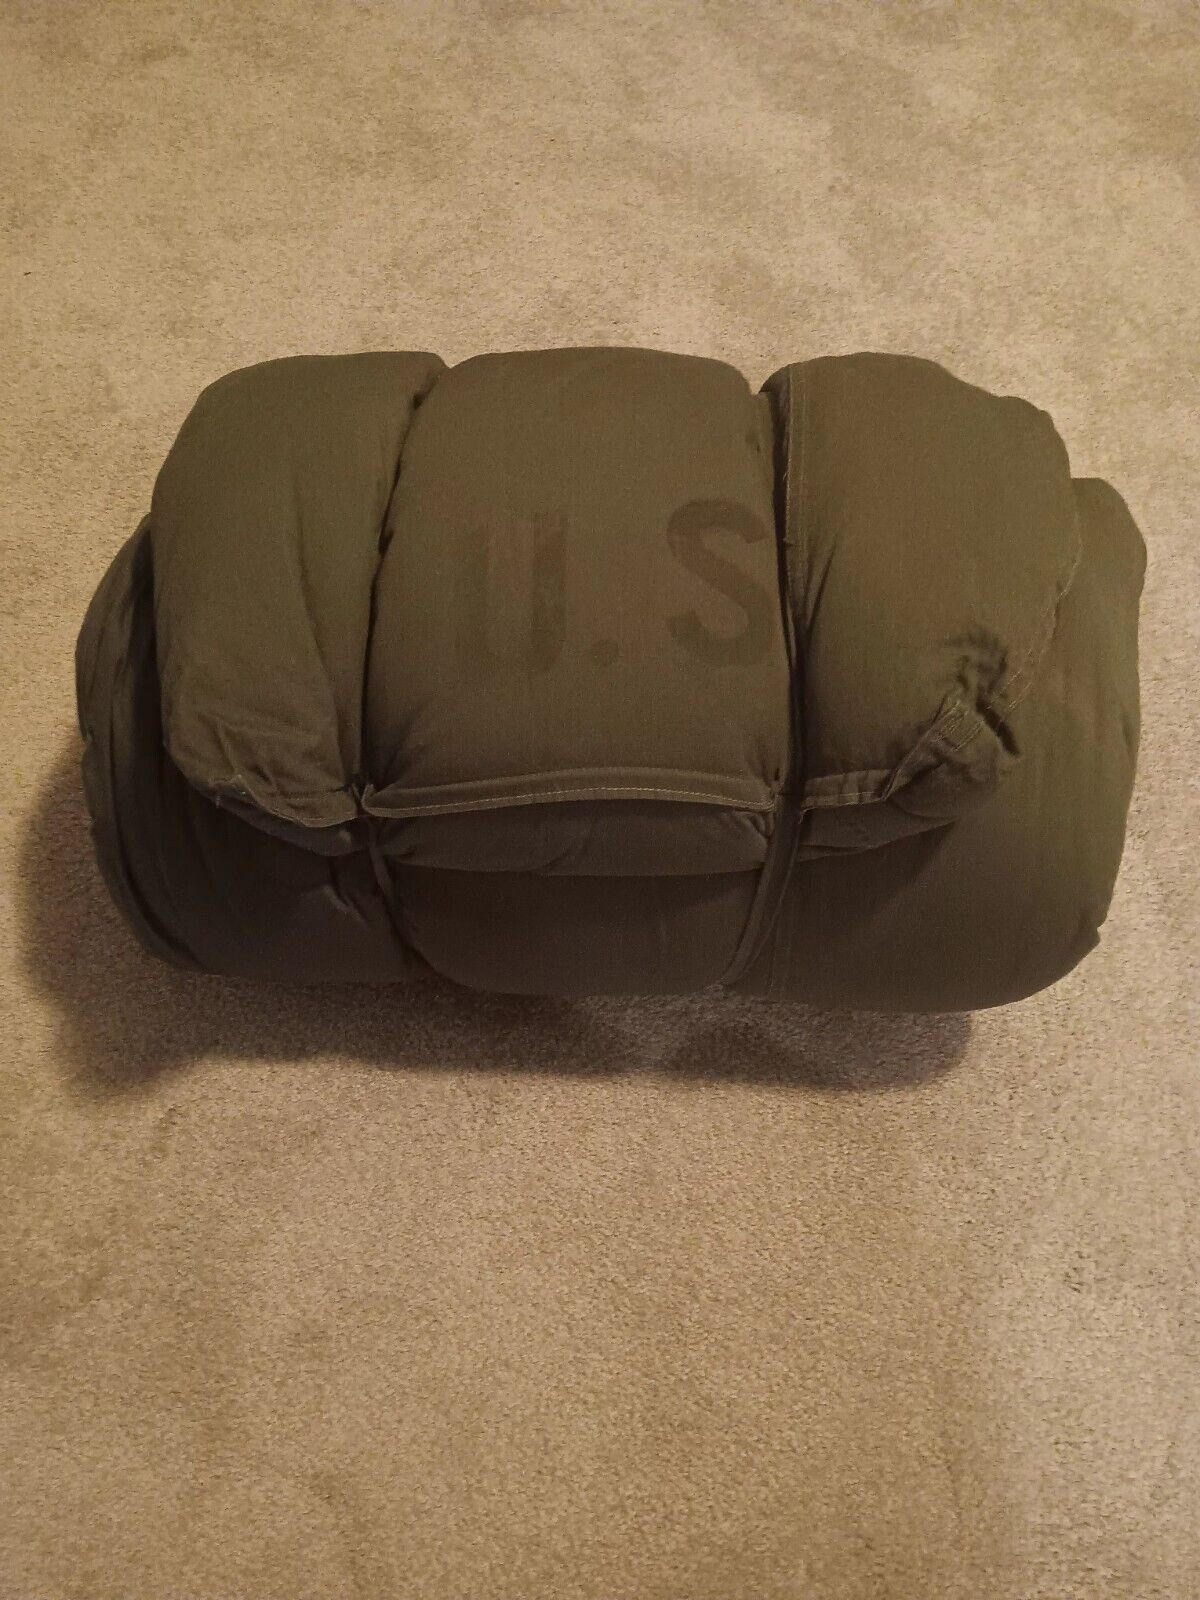 Vintage 1940s-1950s US Military Survival Sleeping Bag W/ Case & Cool Markings